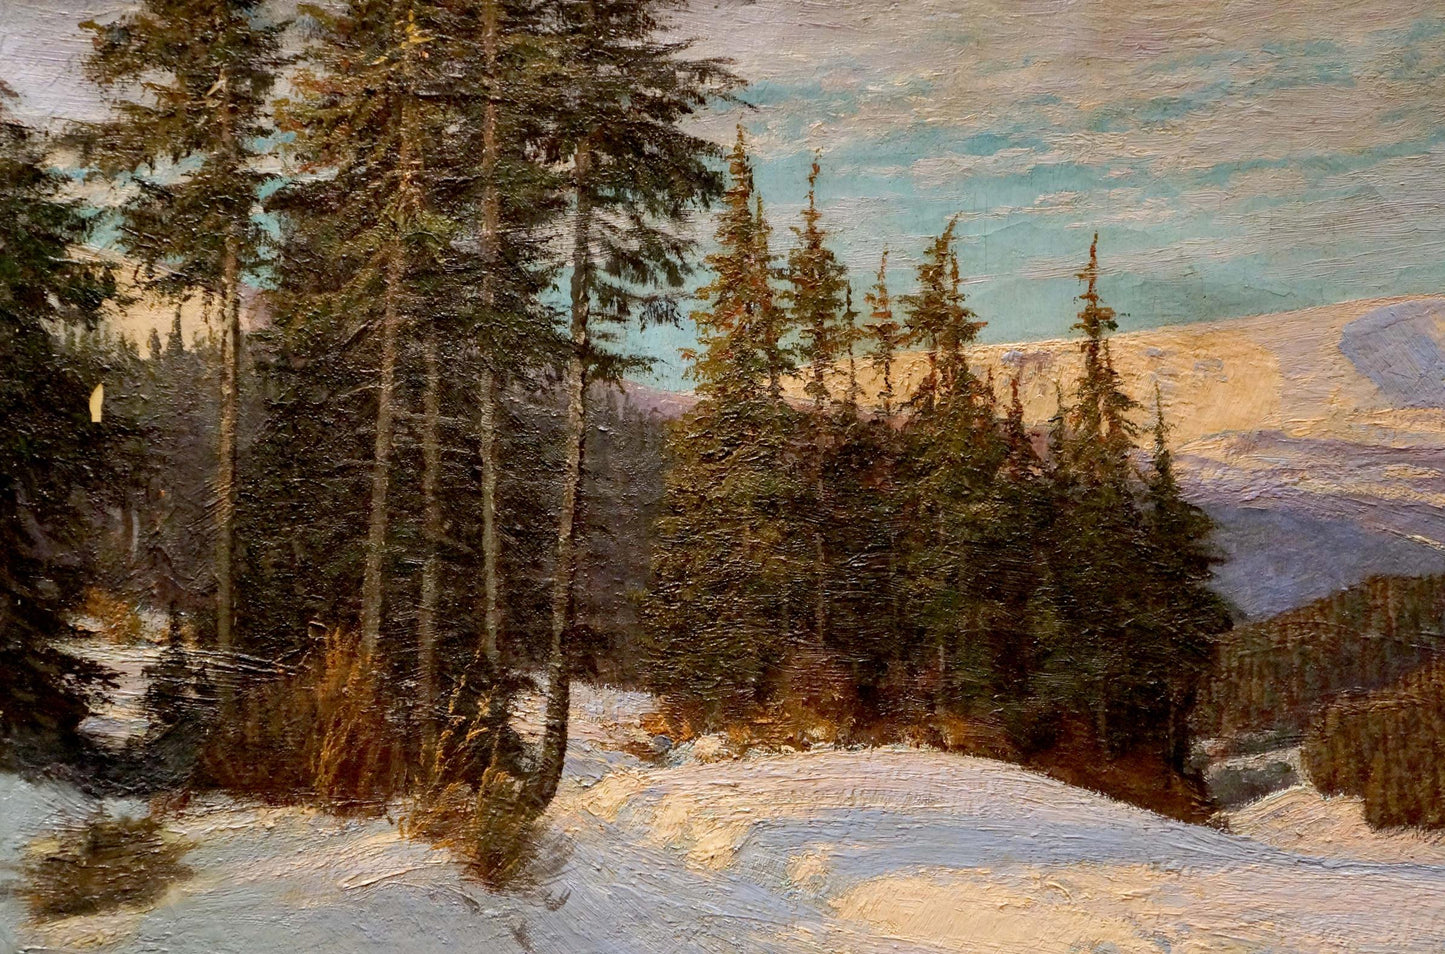 Oil painting Winter landscape Paul Weimann